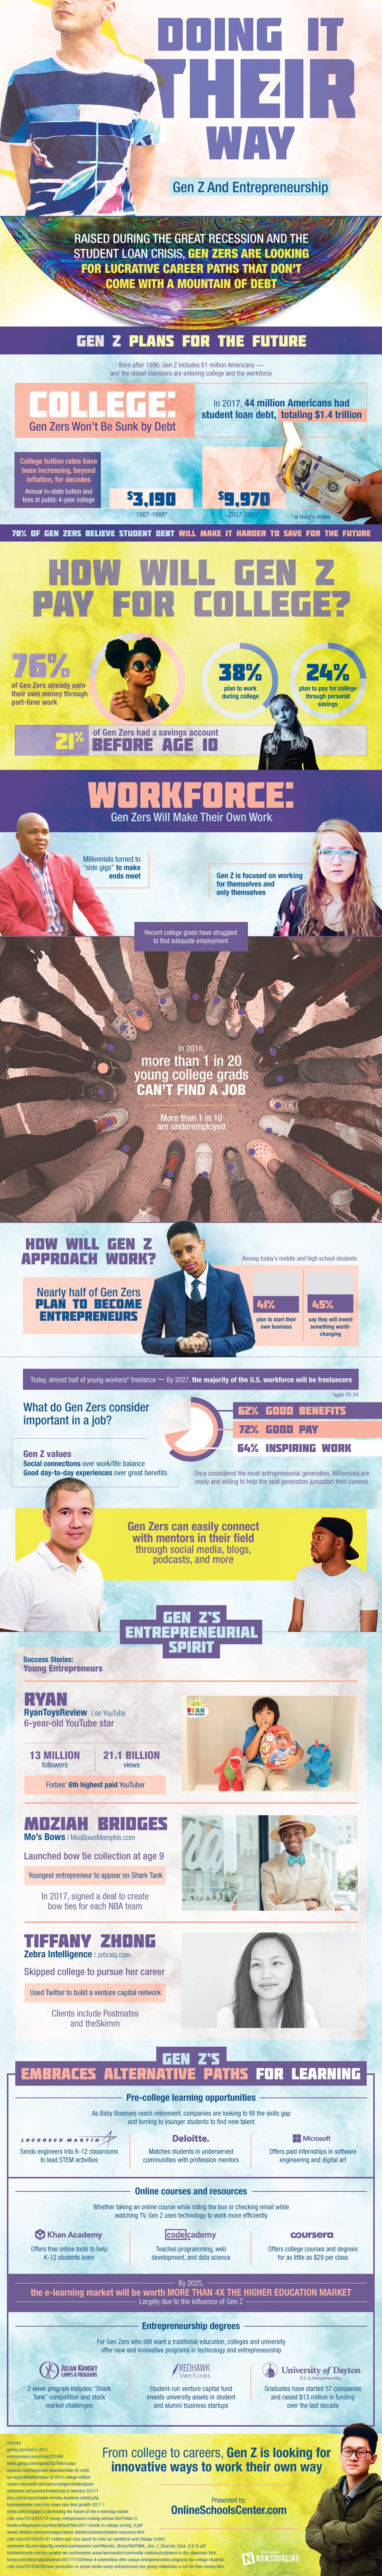 Gen Z - The Most Entrepreneurial Generation Yet?